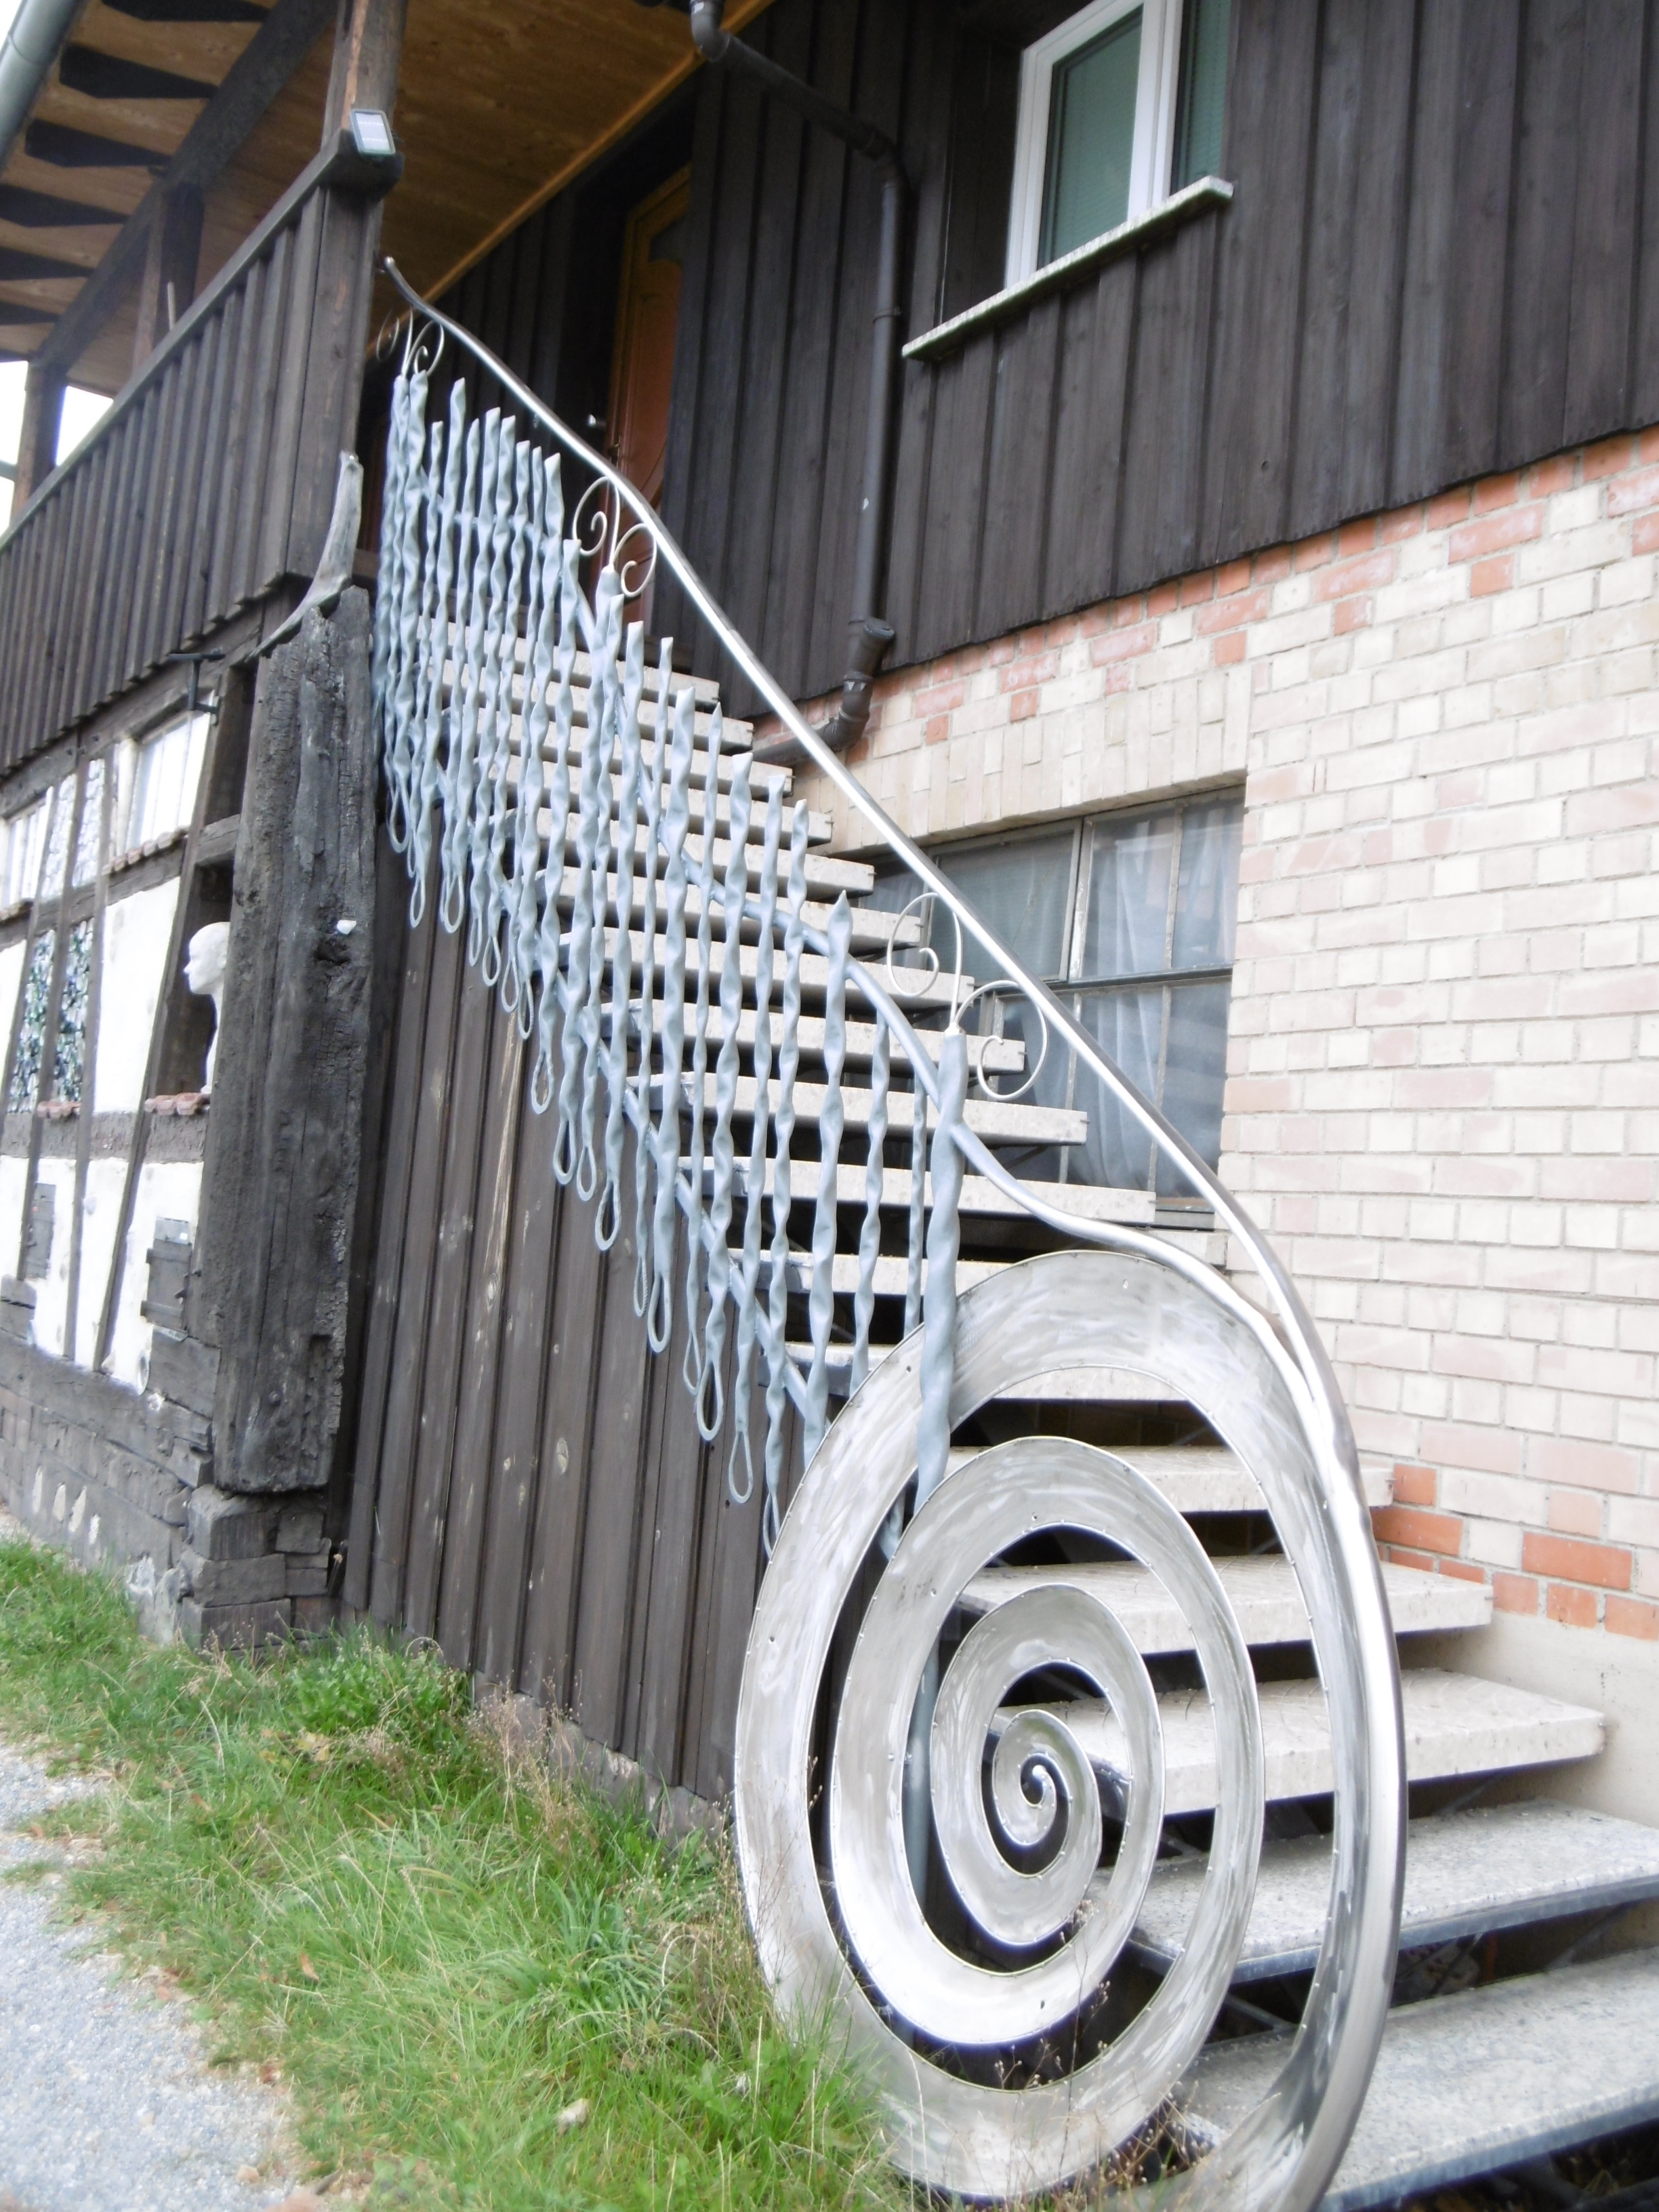 Metall Gestalteter Treppenaufgang, geschmiedetes Rohr, Edelstahl Gestaltung, individuelles Design für Treppen, Balkone, Gitter Tore mo-metallgestaltung.de